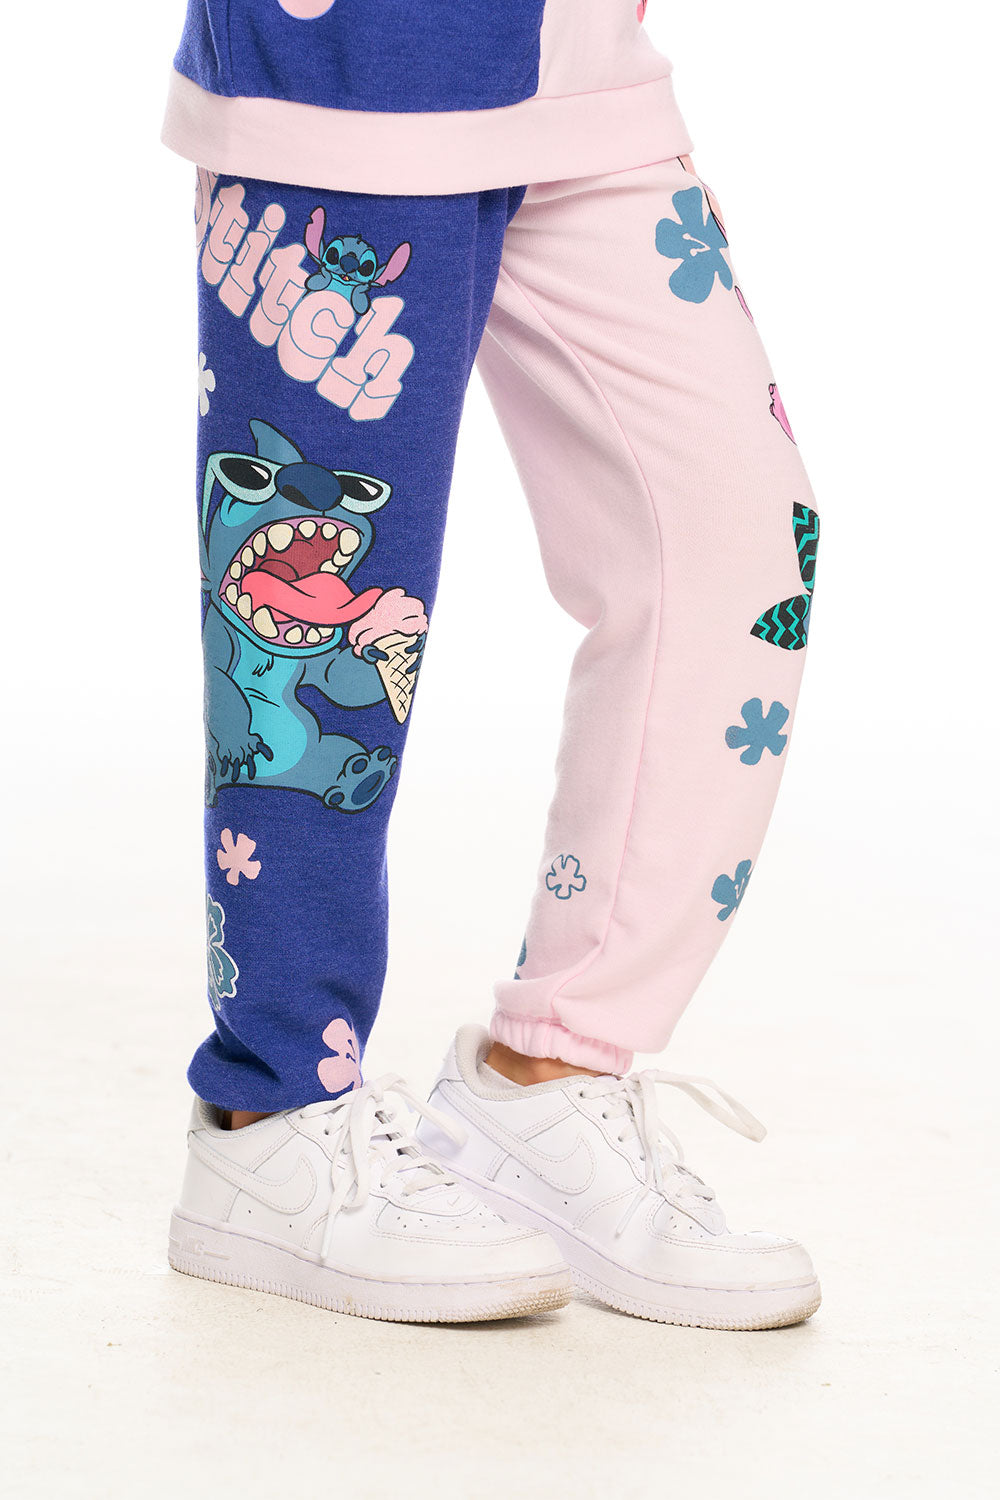  Stitch Stitch Pants, 100% Cotton, Breathable, Girls